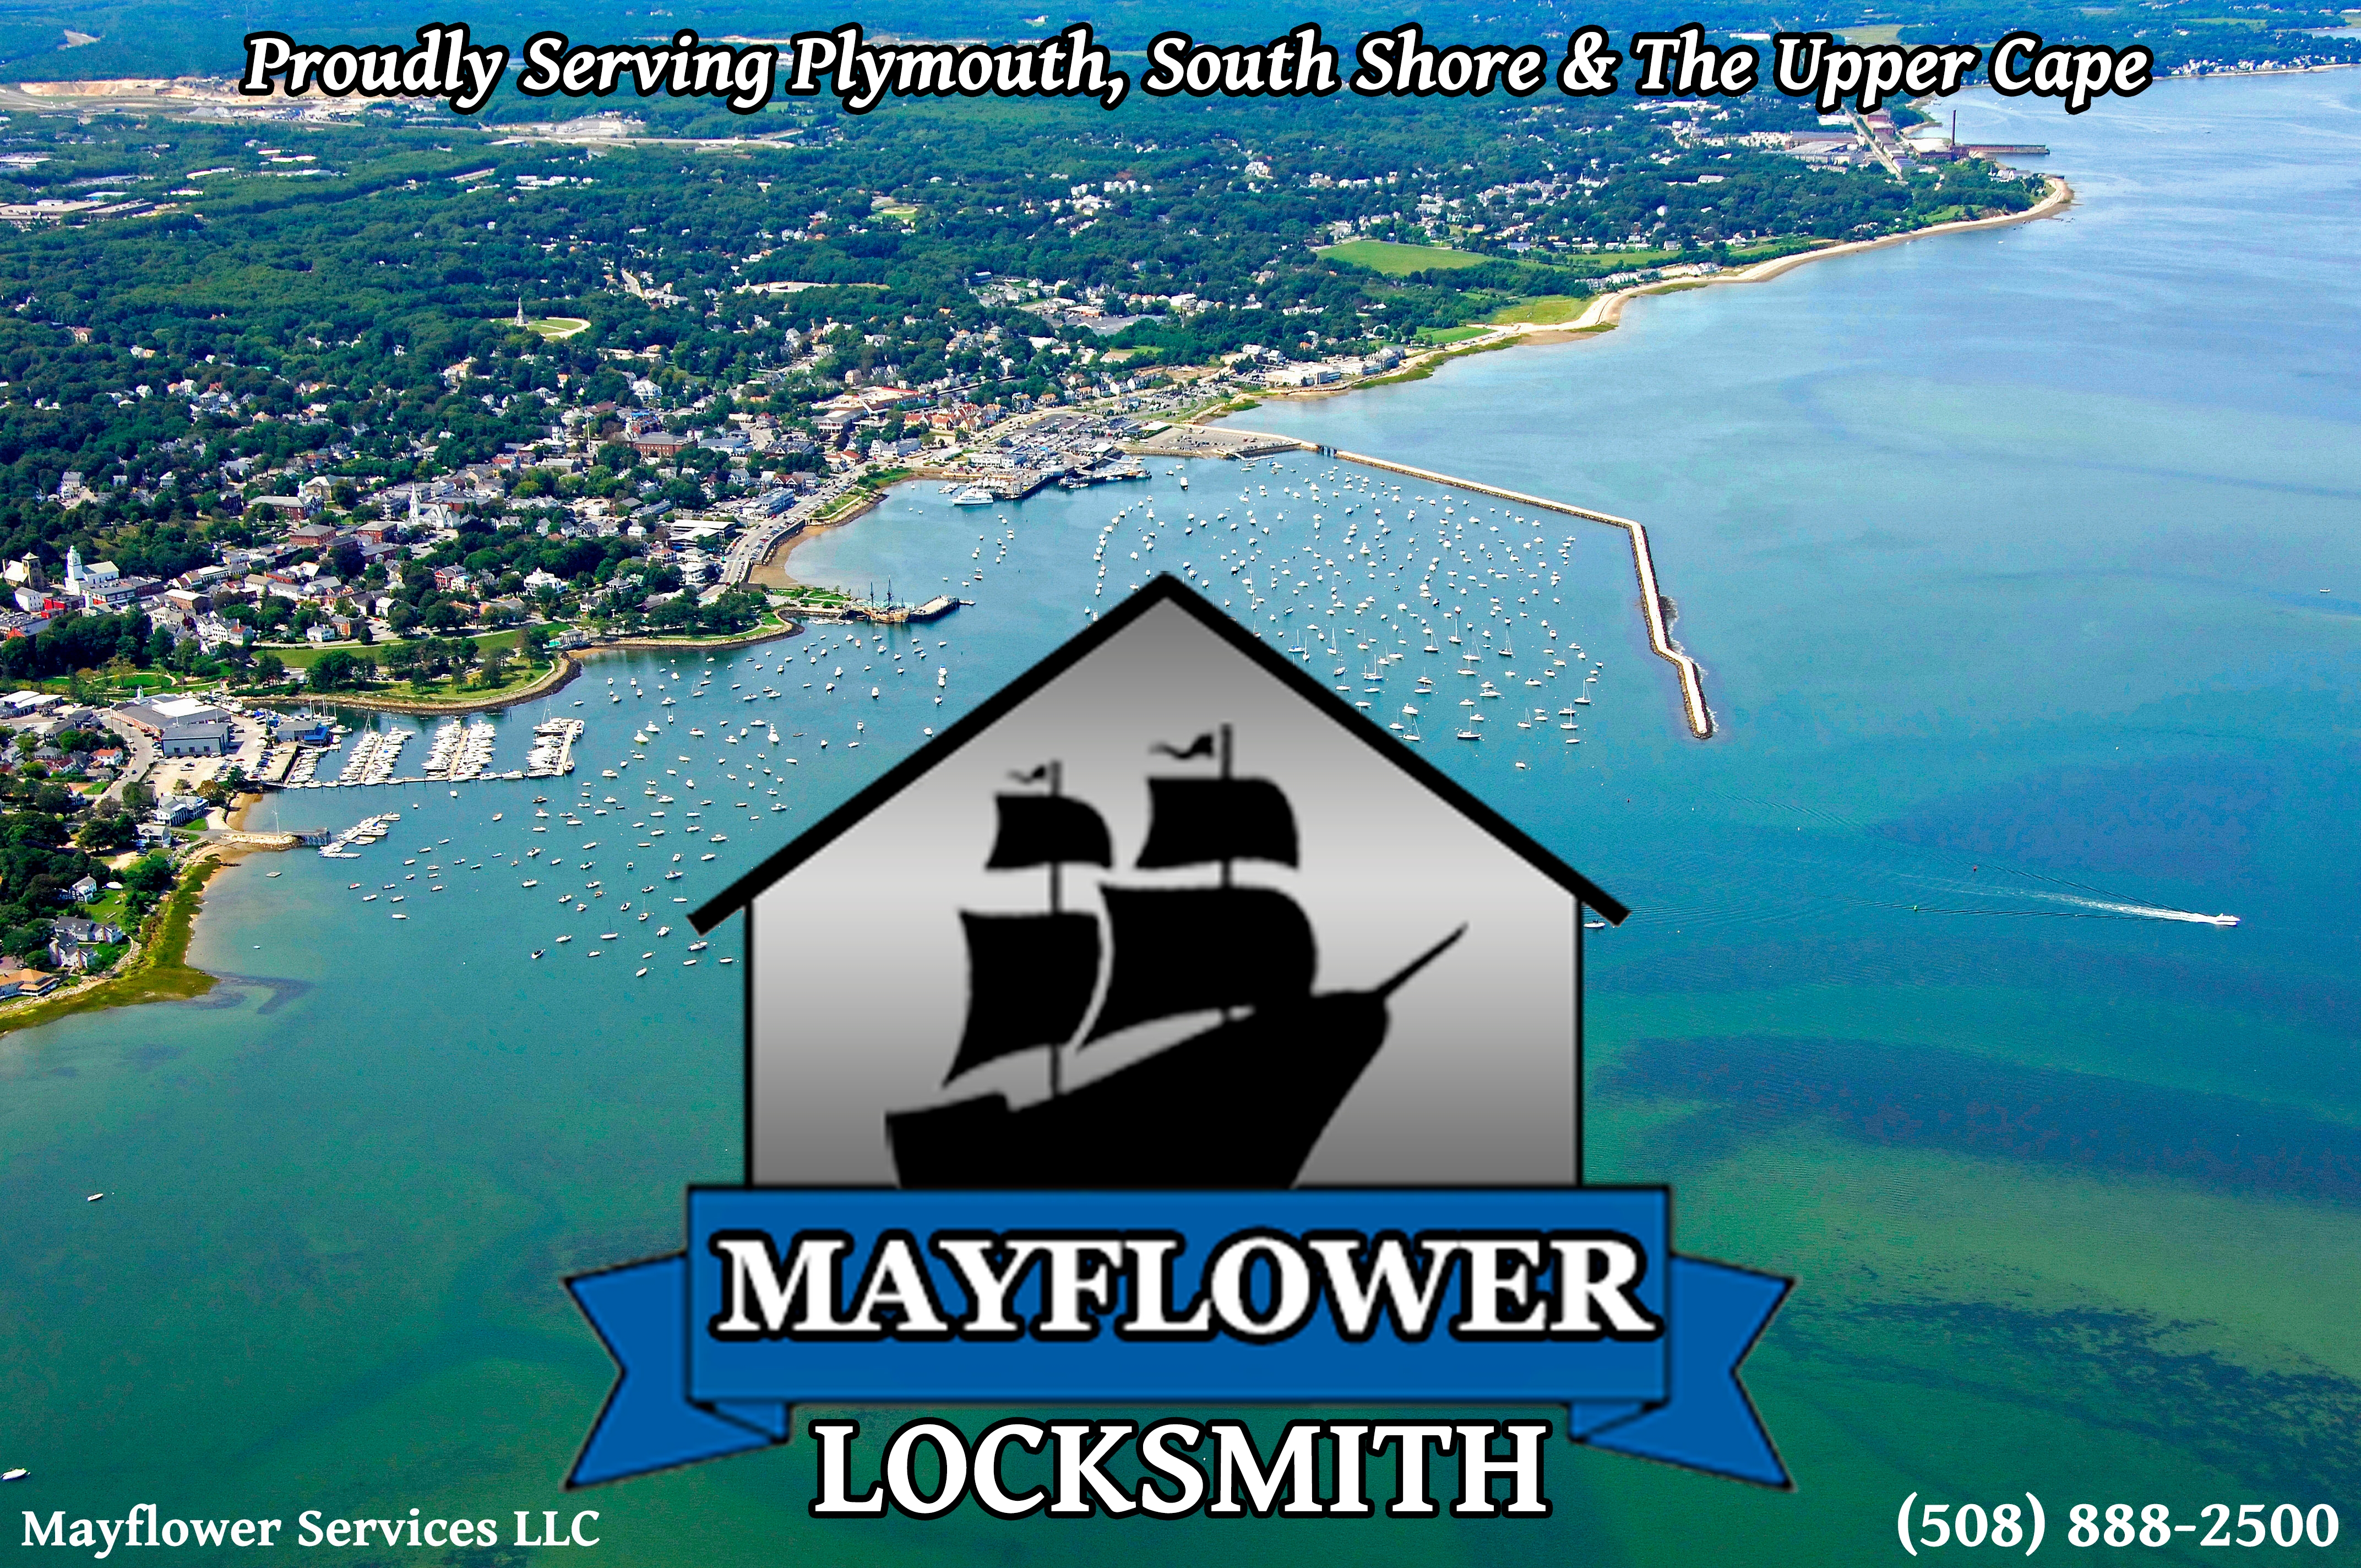 locksmith in plymouth ma